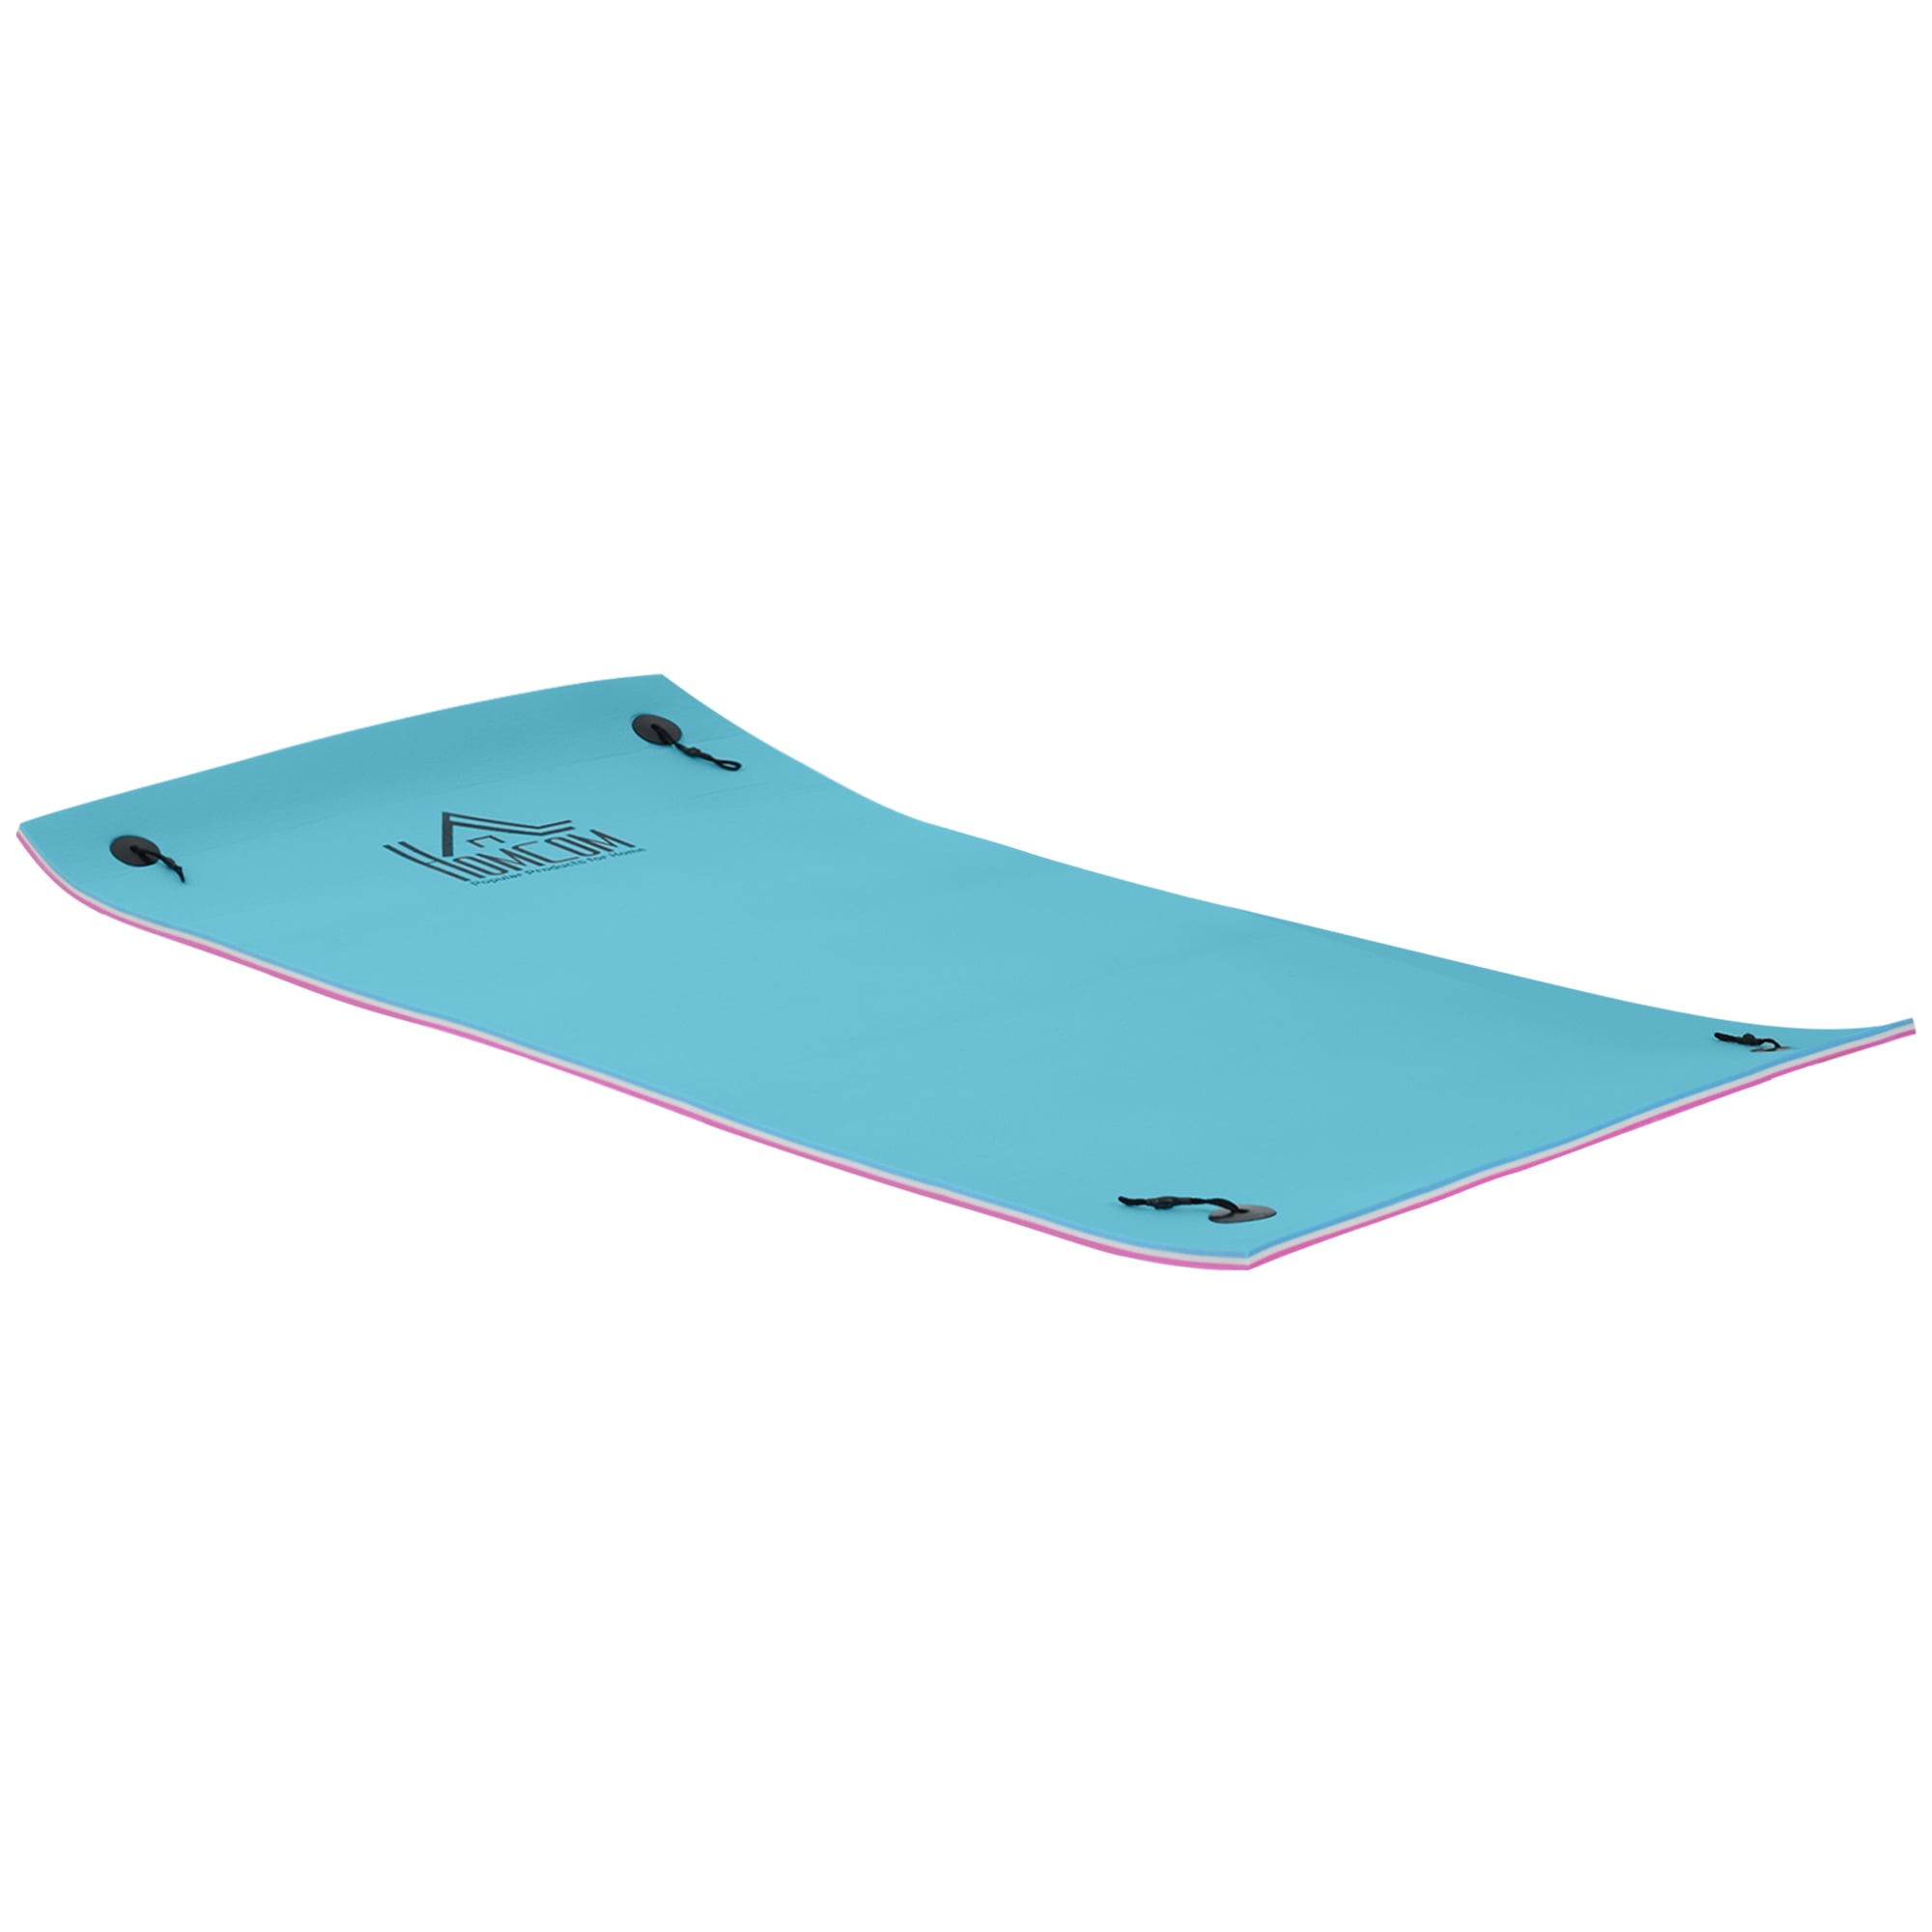 HOMCOM Floating Water Mat, 3-Layer Swimming Pool Float Ultimate Super ...